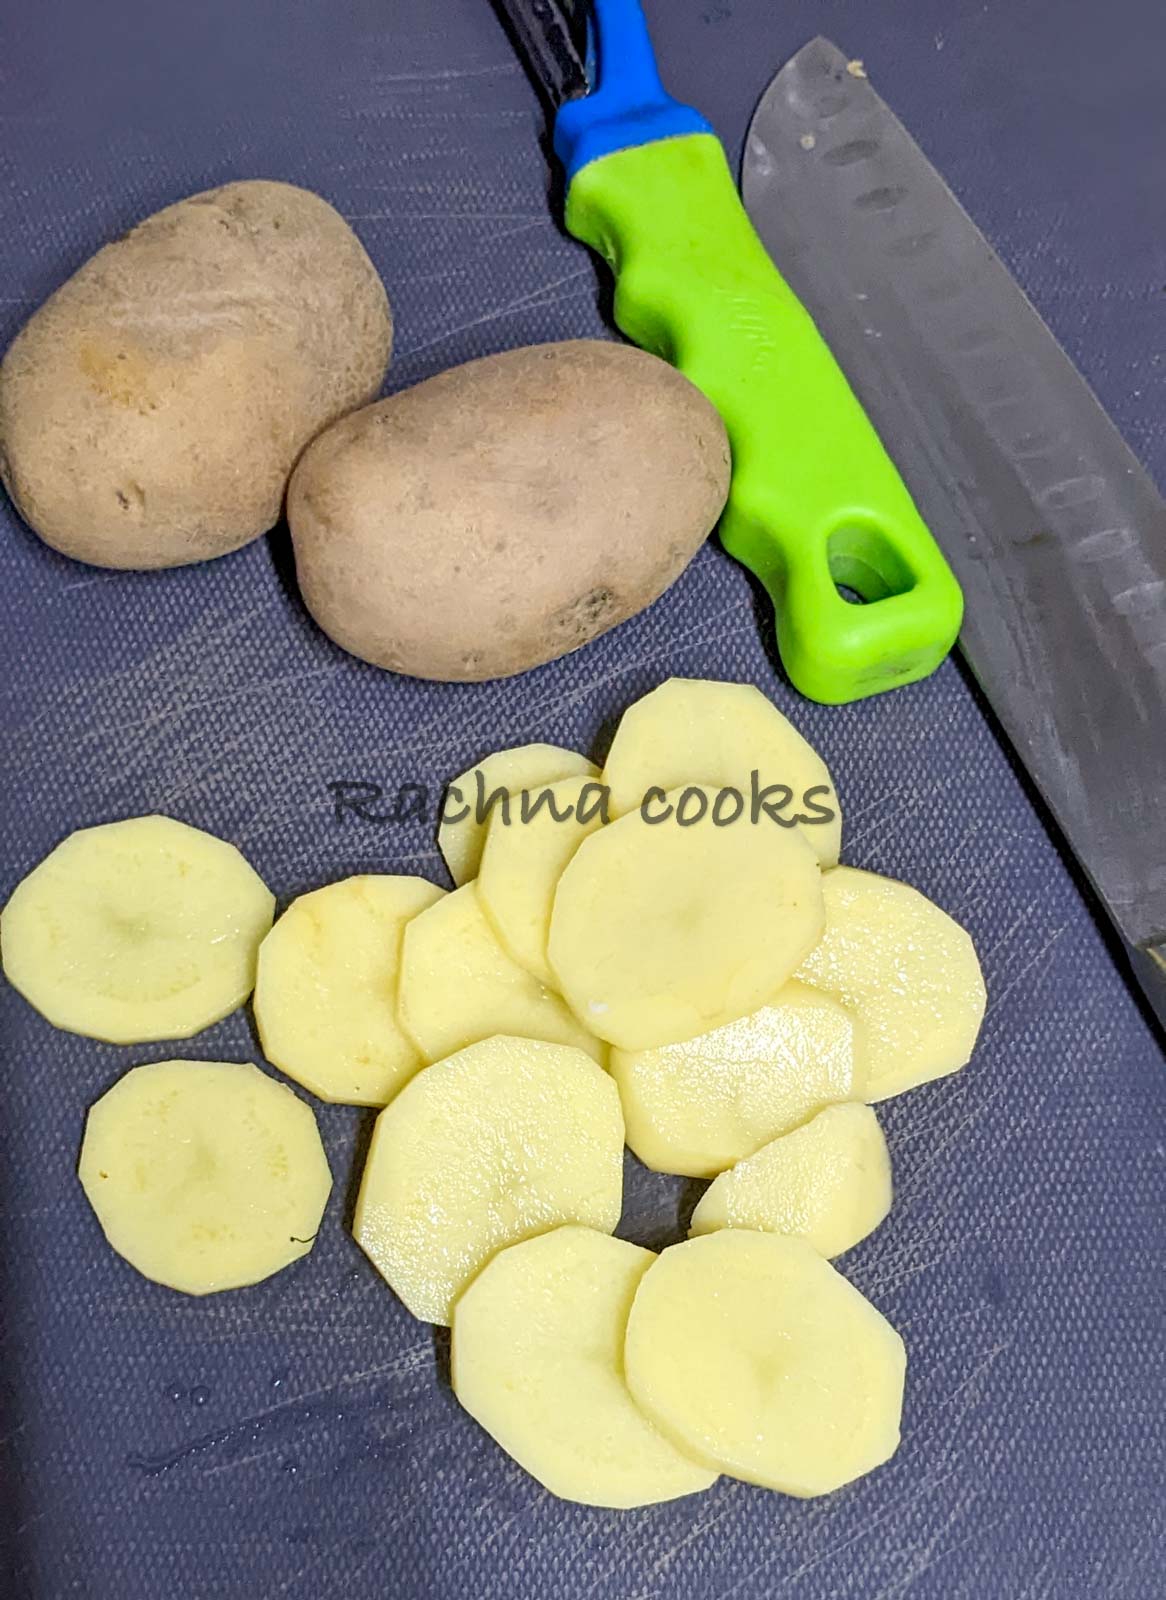 Potato sliced into ½ inch thick slices